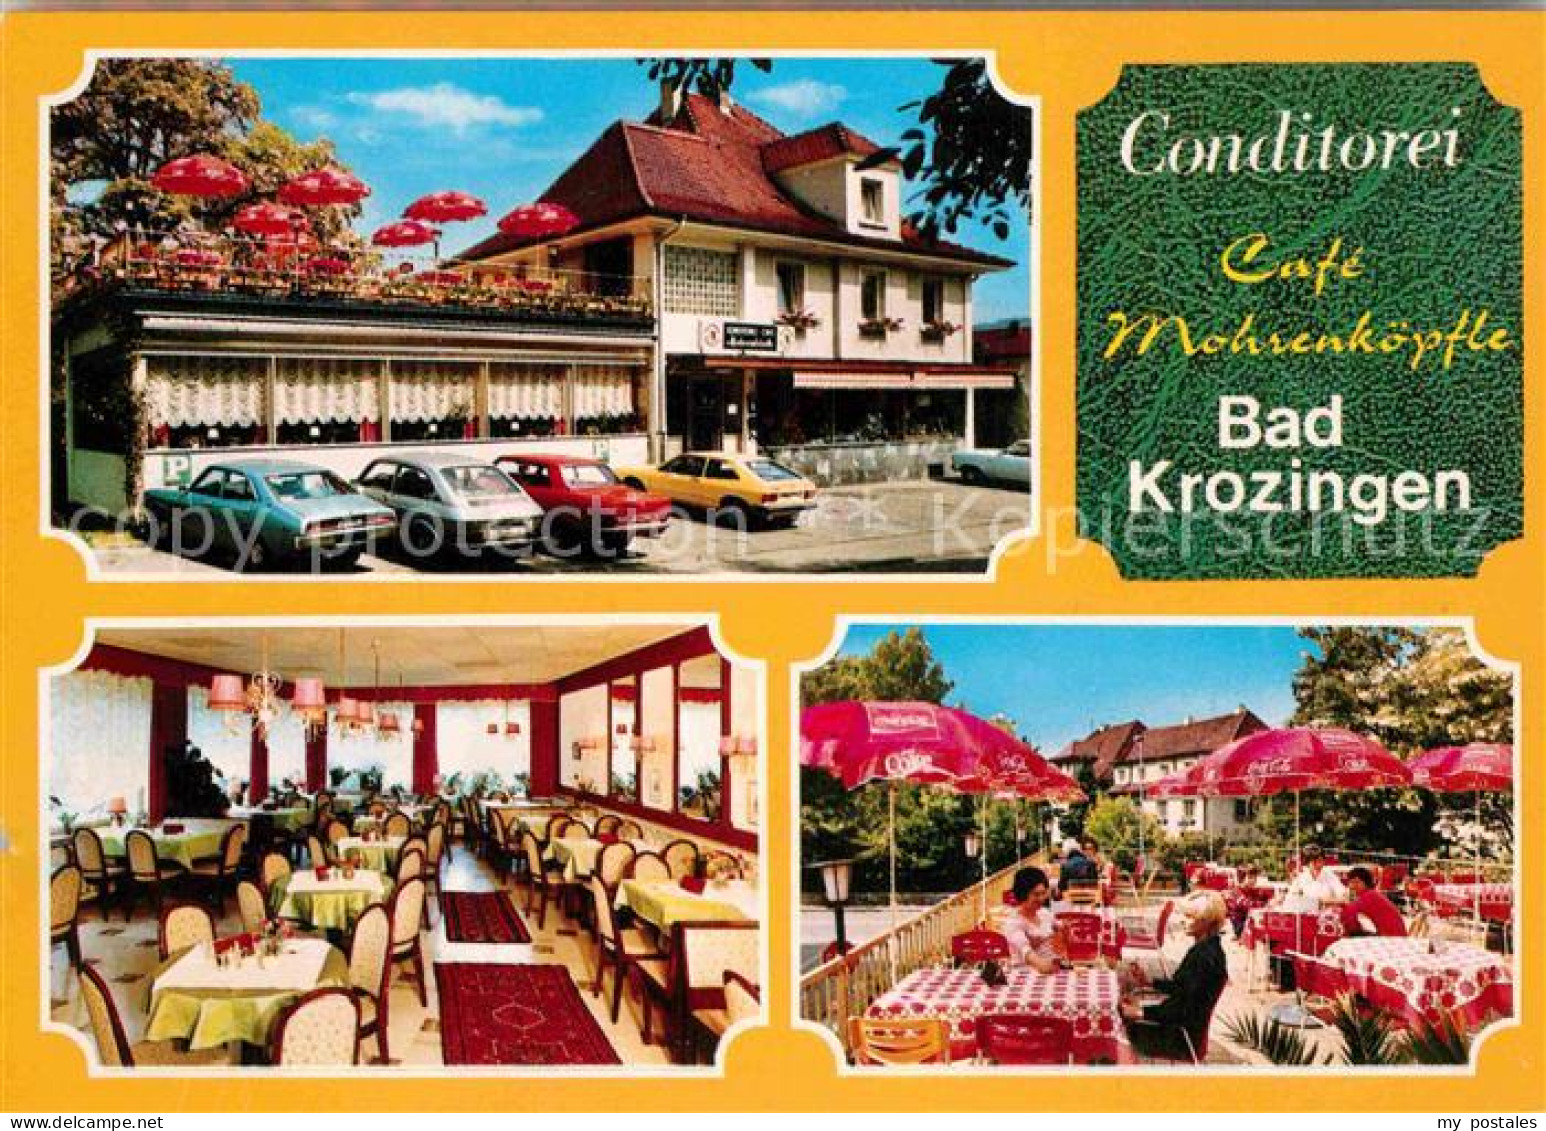 72797702 Bad Krozingen Conditorei Cafe Mohrenkoepfle Bad Krozingen - Bad Krozingen